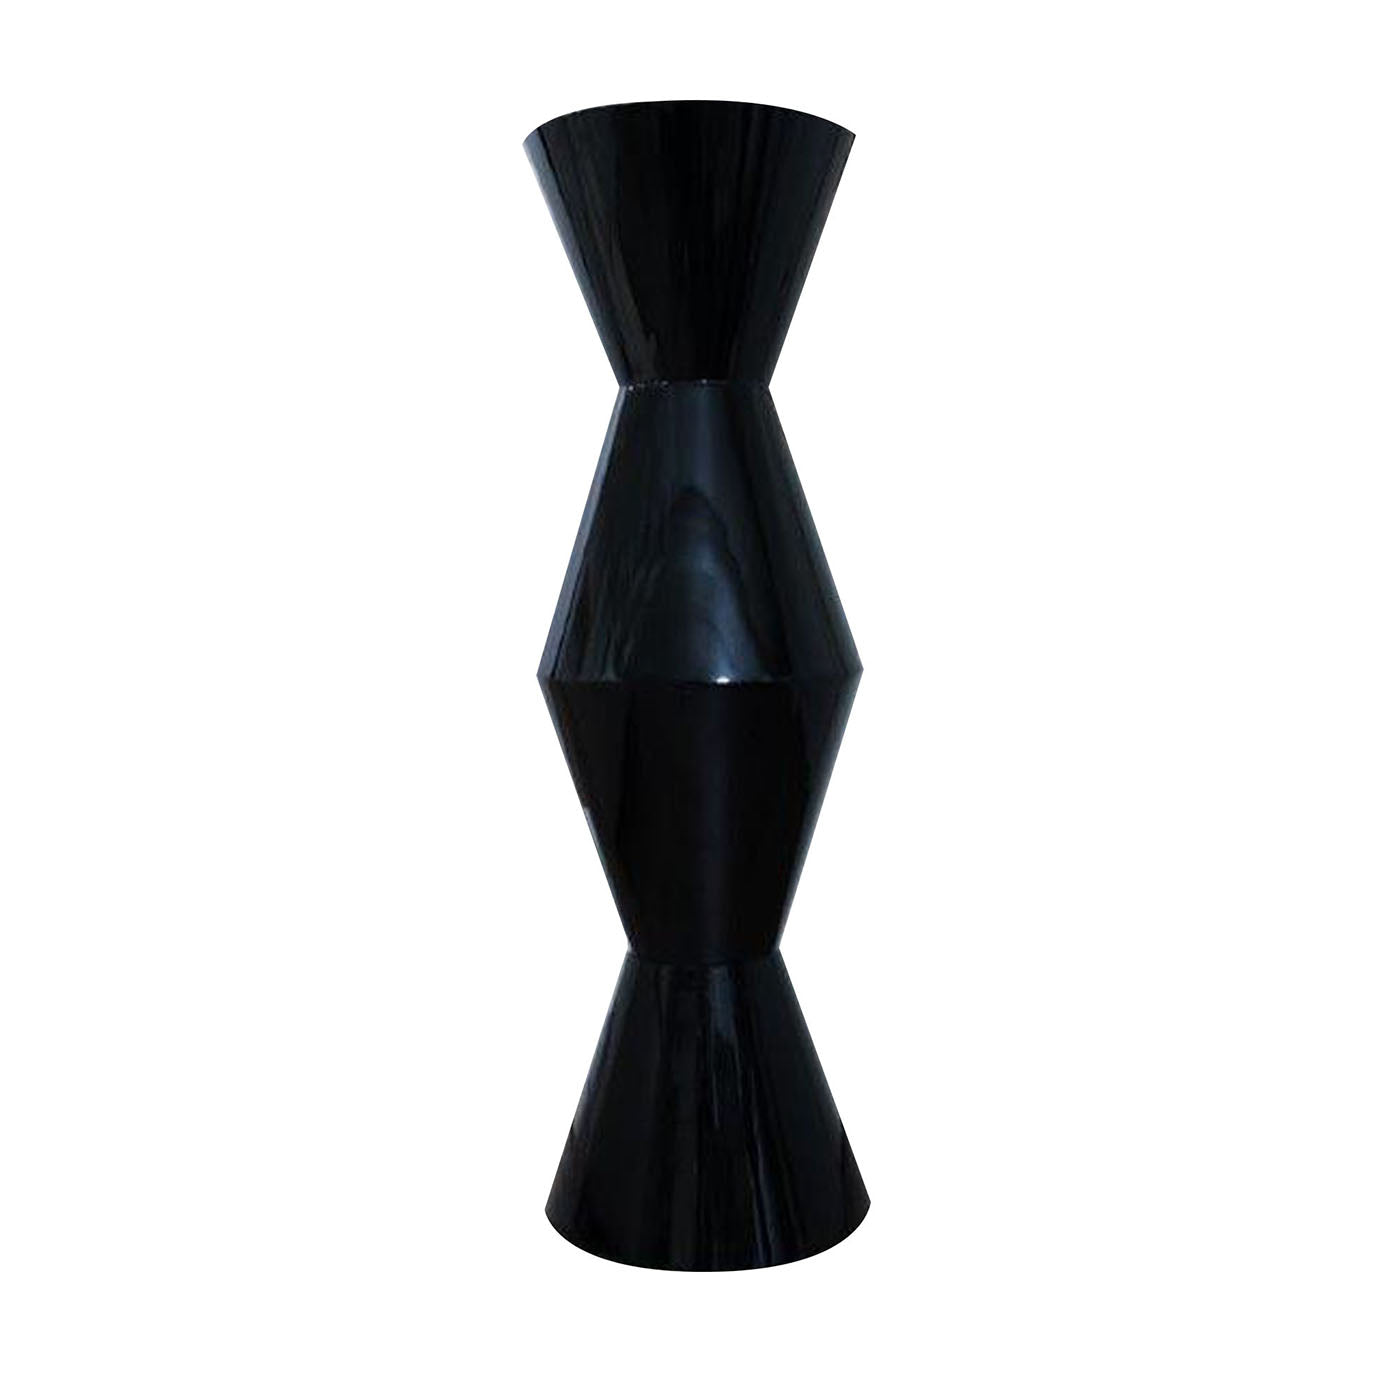 Vase noir FoRMA Poliedro de Simone Micheli - Vue principale